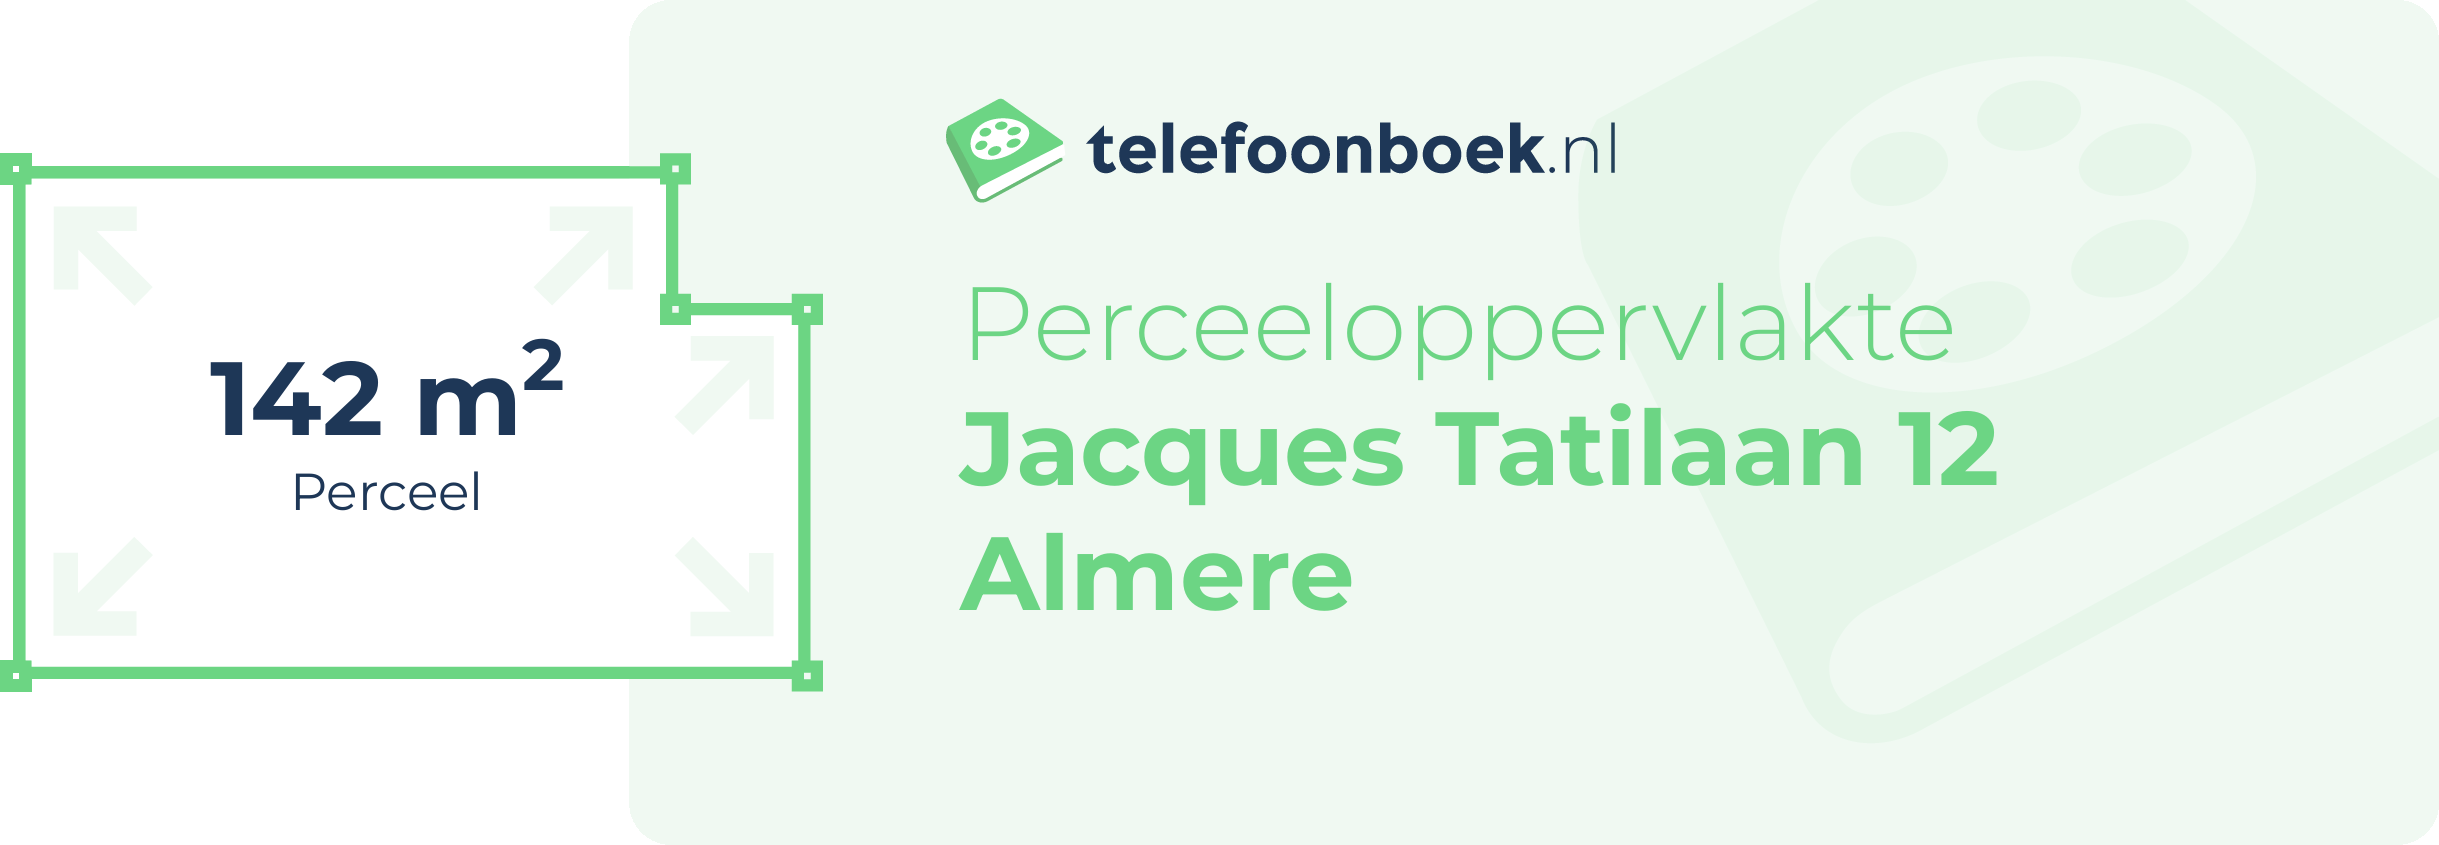 Perceeloppervlakte Jacques Tatilaan 12 Almere